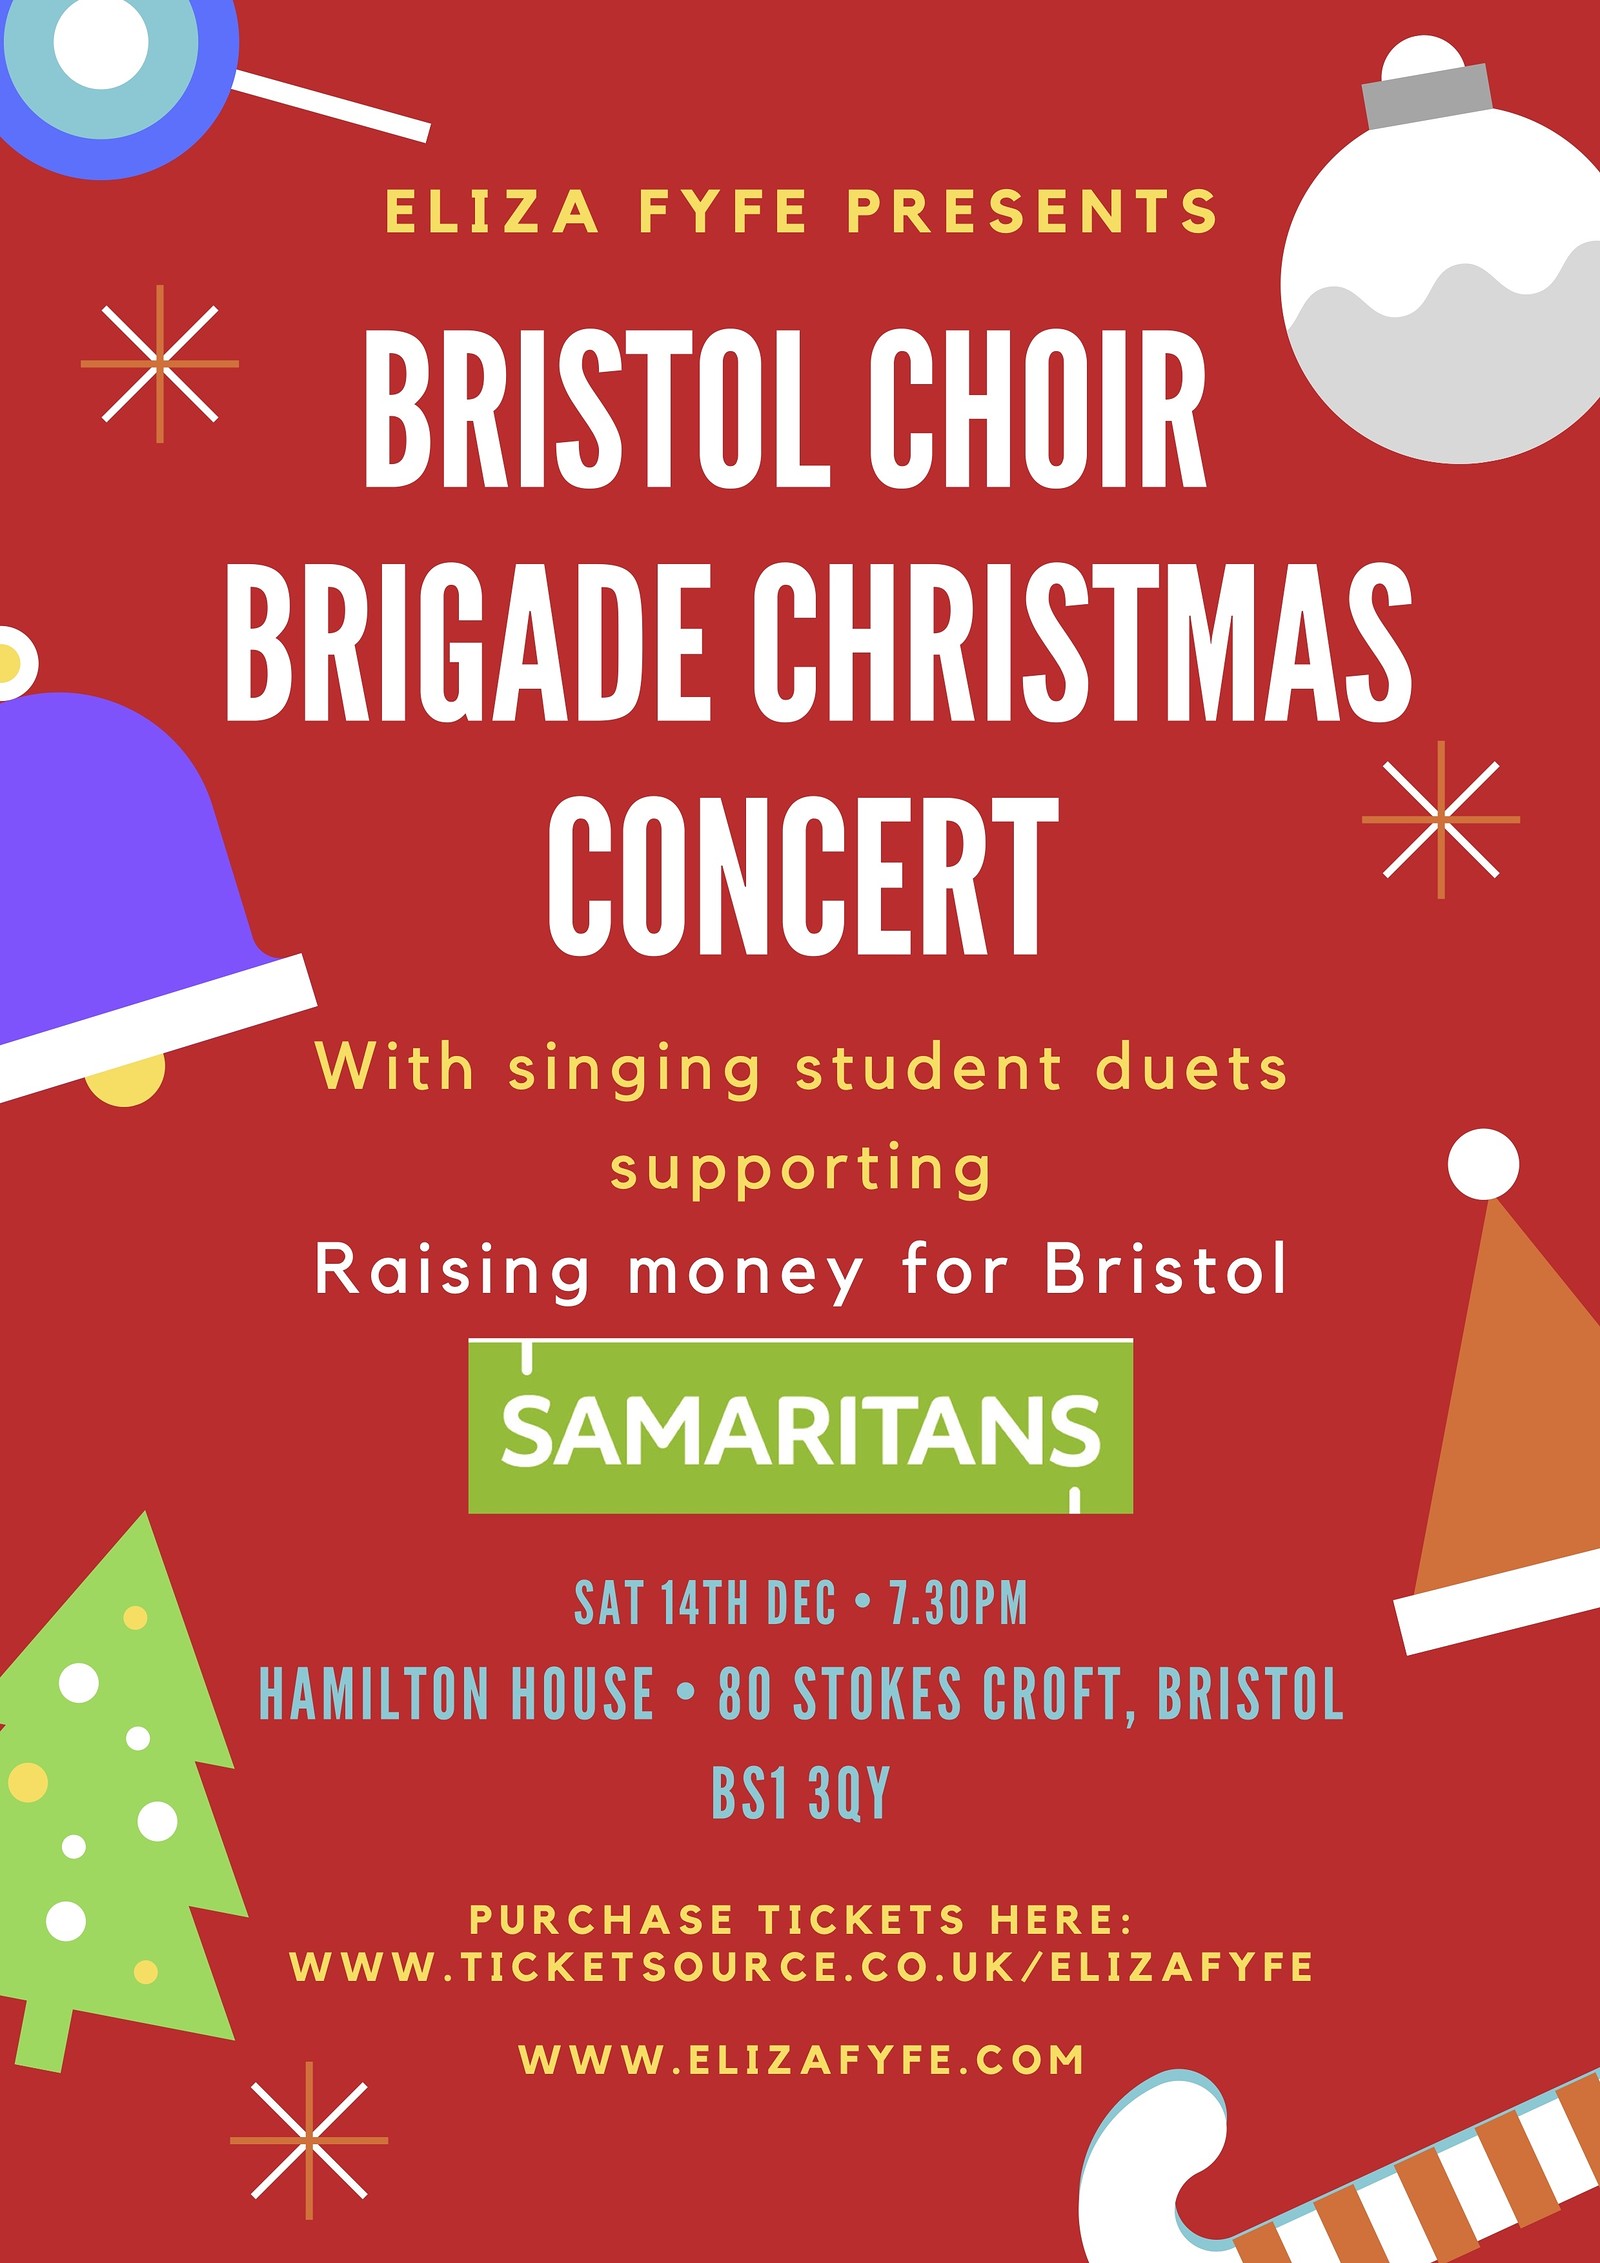 Bristol Choir Brigade Christmas Concert at Hamilton House